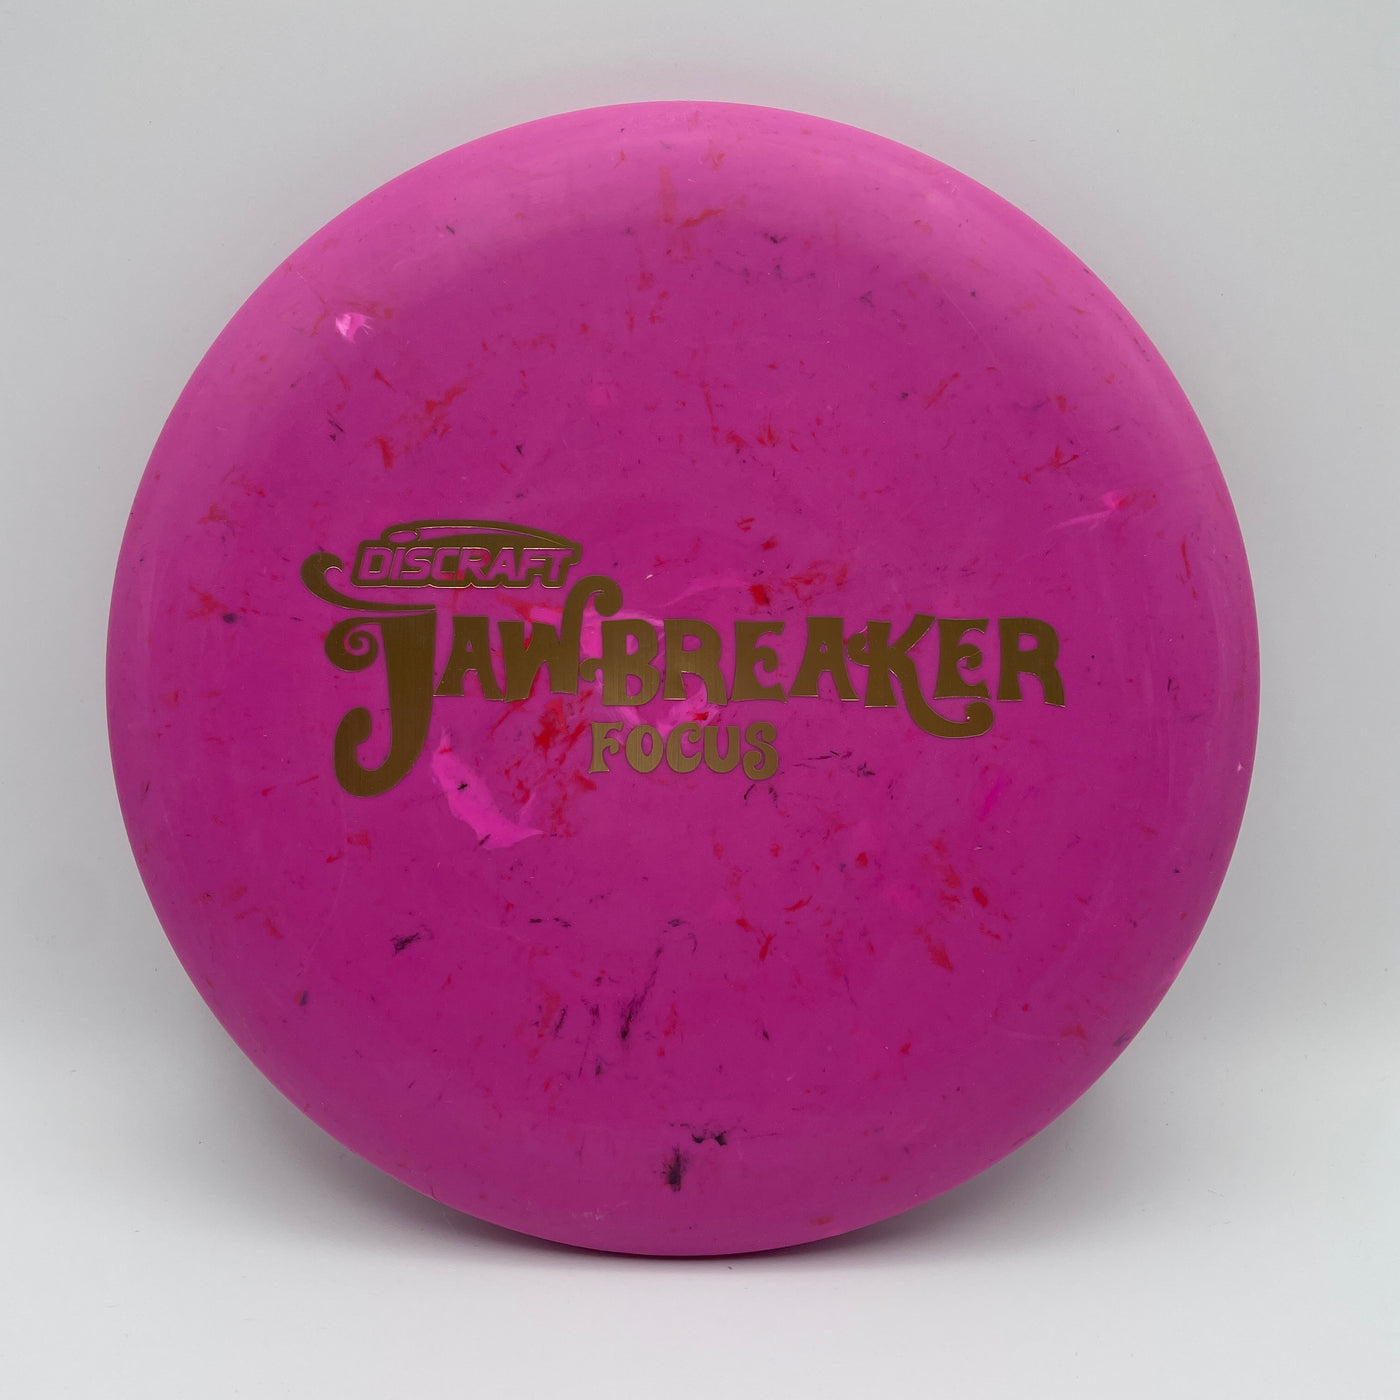 Jawbreaker Focus